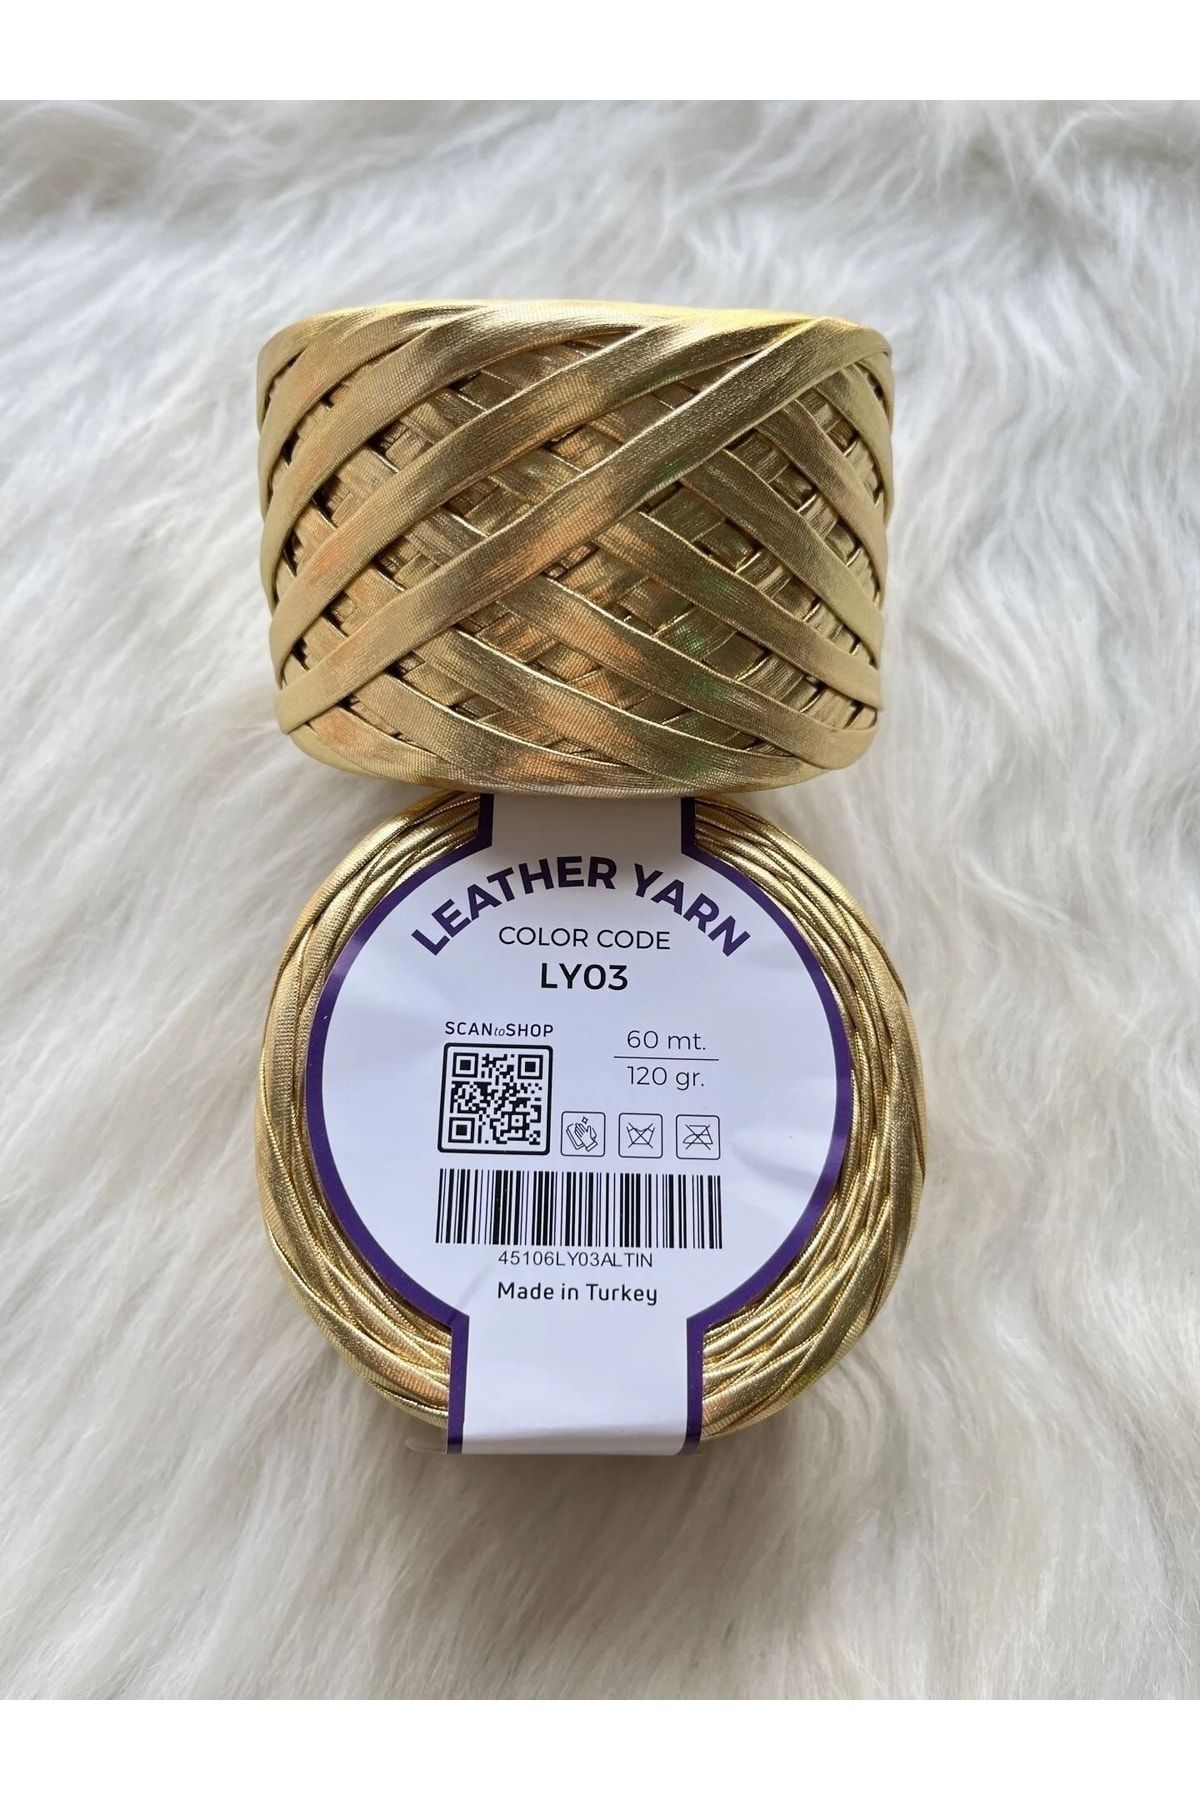 Mira Filati Gold - Metalik Deri Ip - Leather Yarn - 120g. - 60m. - Çanta - Cüzdan - Kılıf -